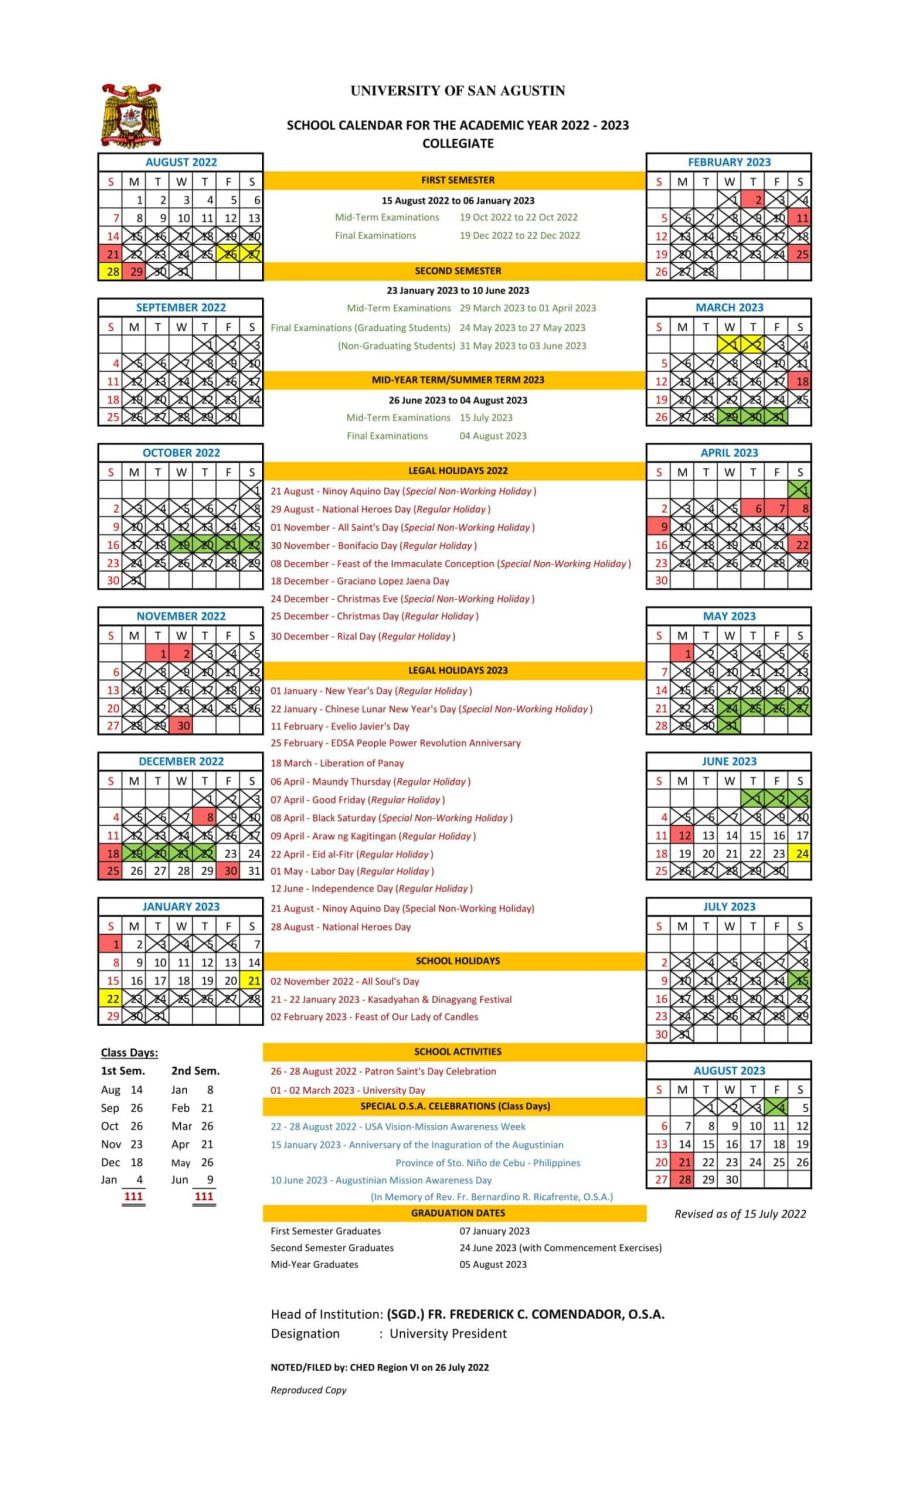 Collegiate School Calendar AY 2022-2023 - UNIVERSITY OF SAN AGUSTIN